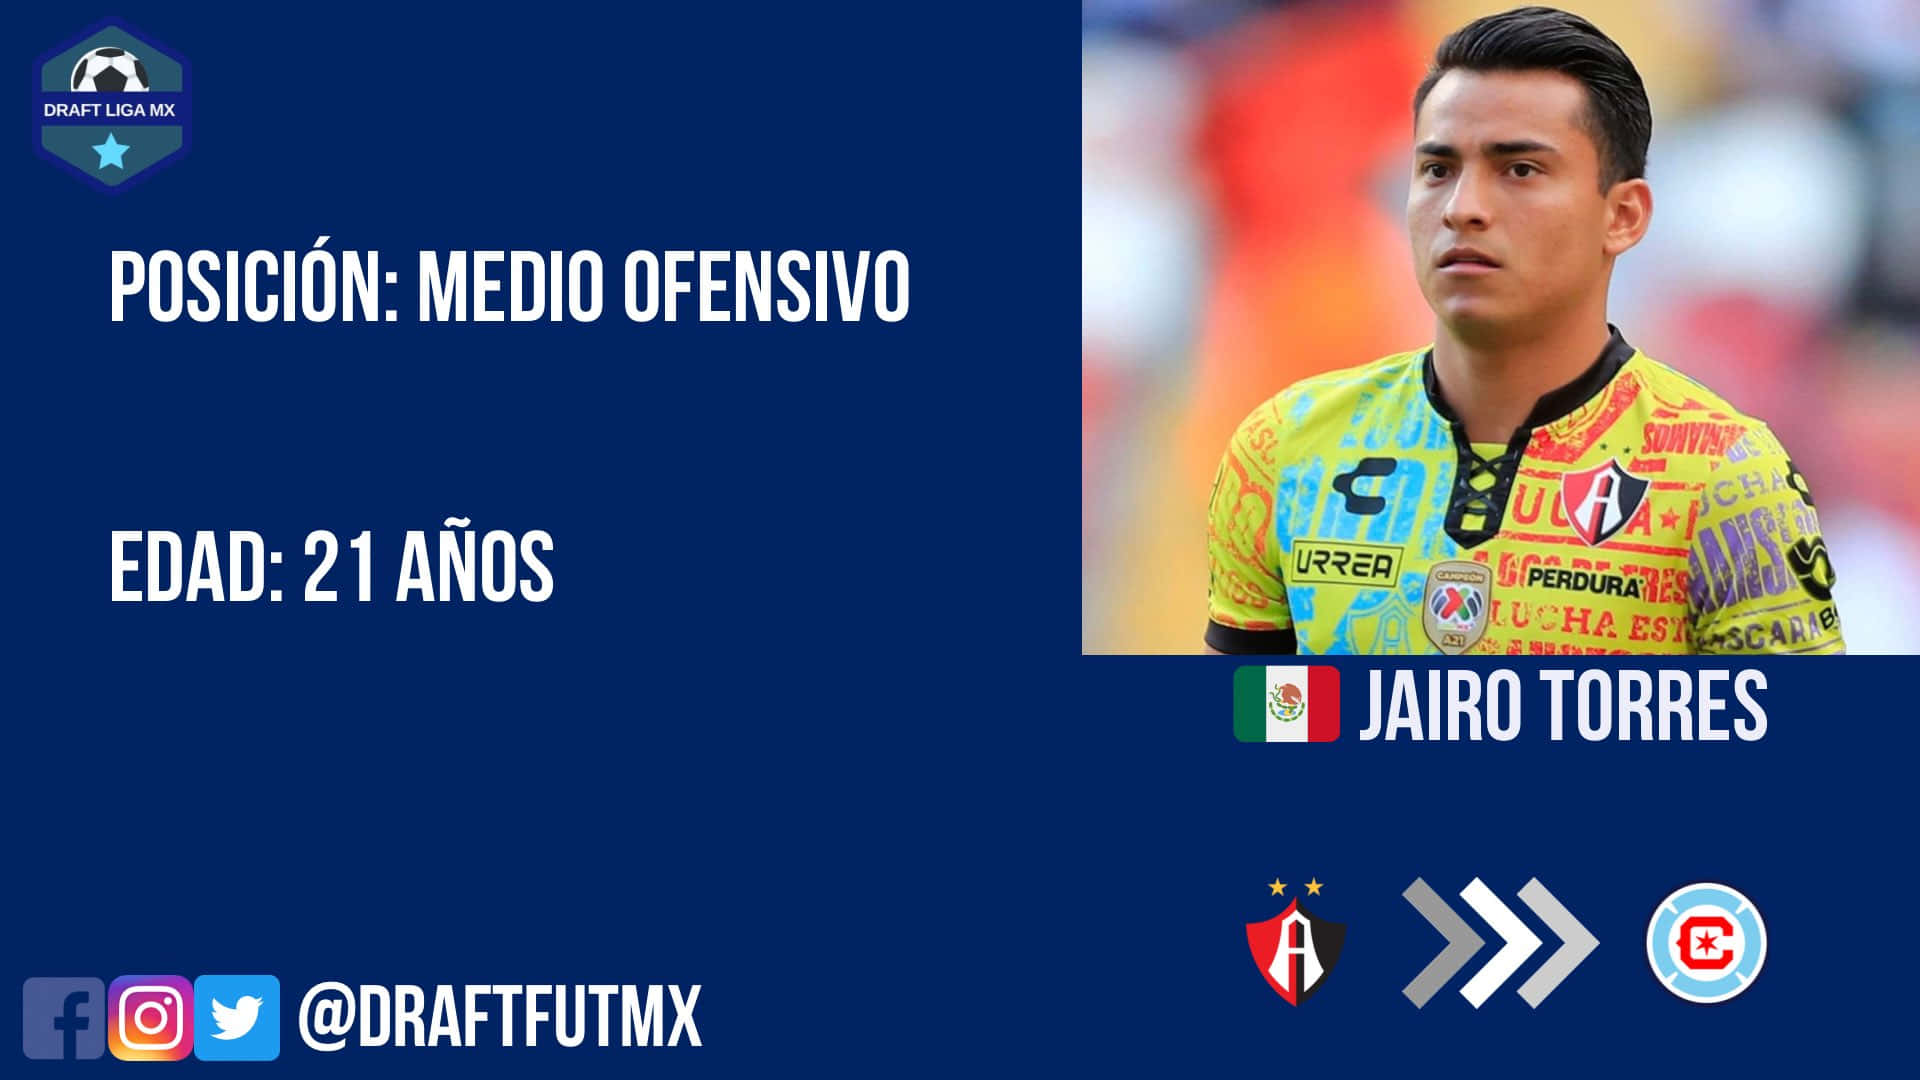 Jairo Torres Draft Liga MX Poster Wallpaper